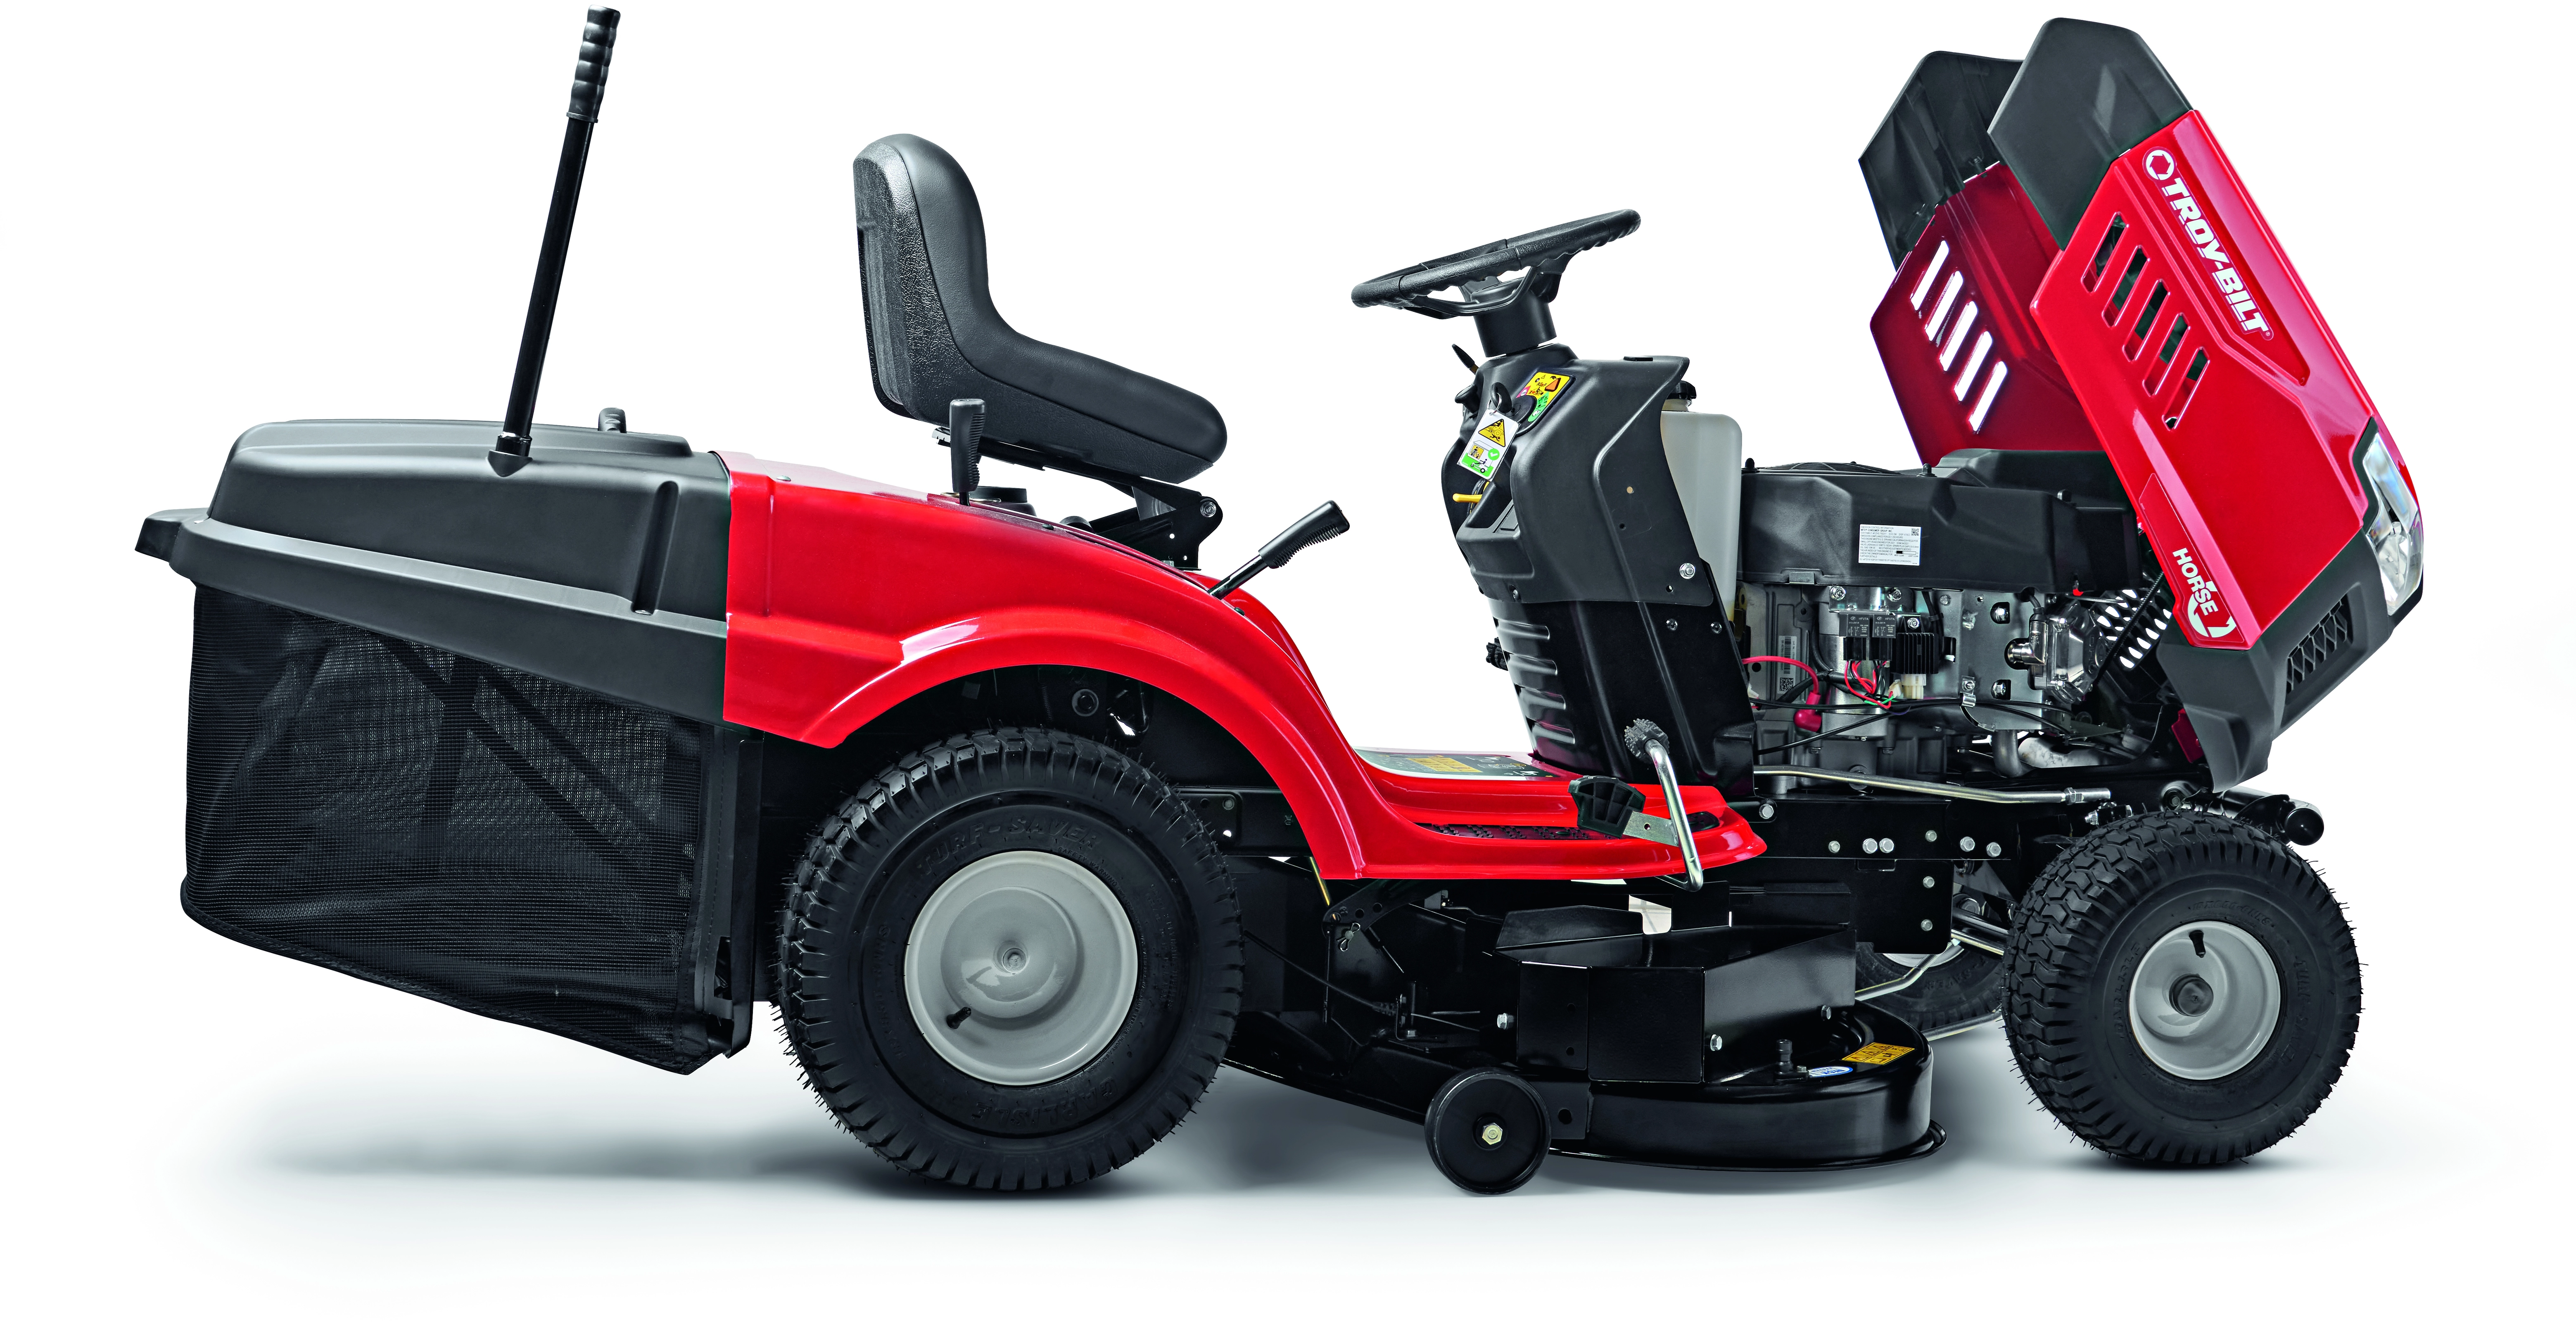 Traktor Sitz bezug Schild 600d 31-36cm Höhe Traktor Sitzkissen bezug zum  Reiten Rasenmäher Traktor Farm Fahrzeug Zubehör - AliExpress